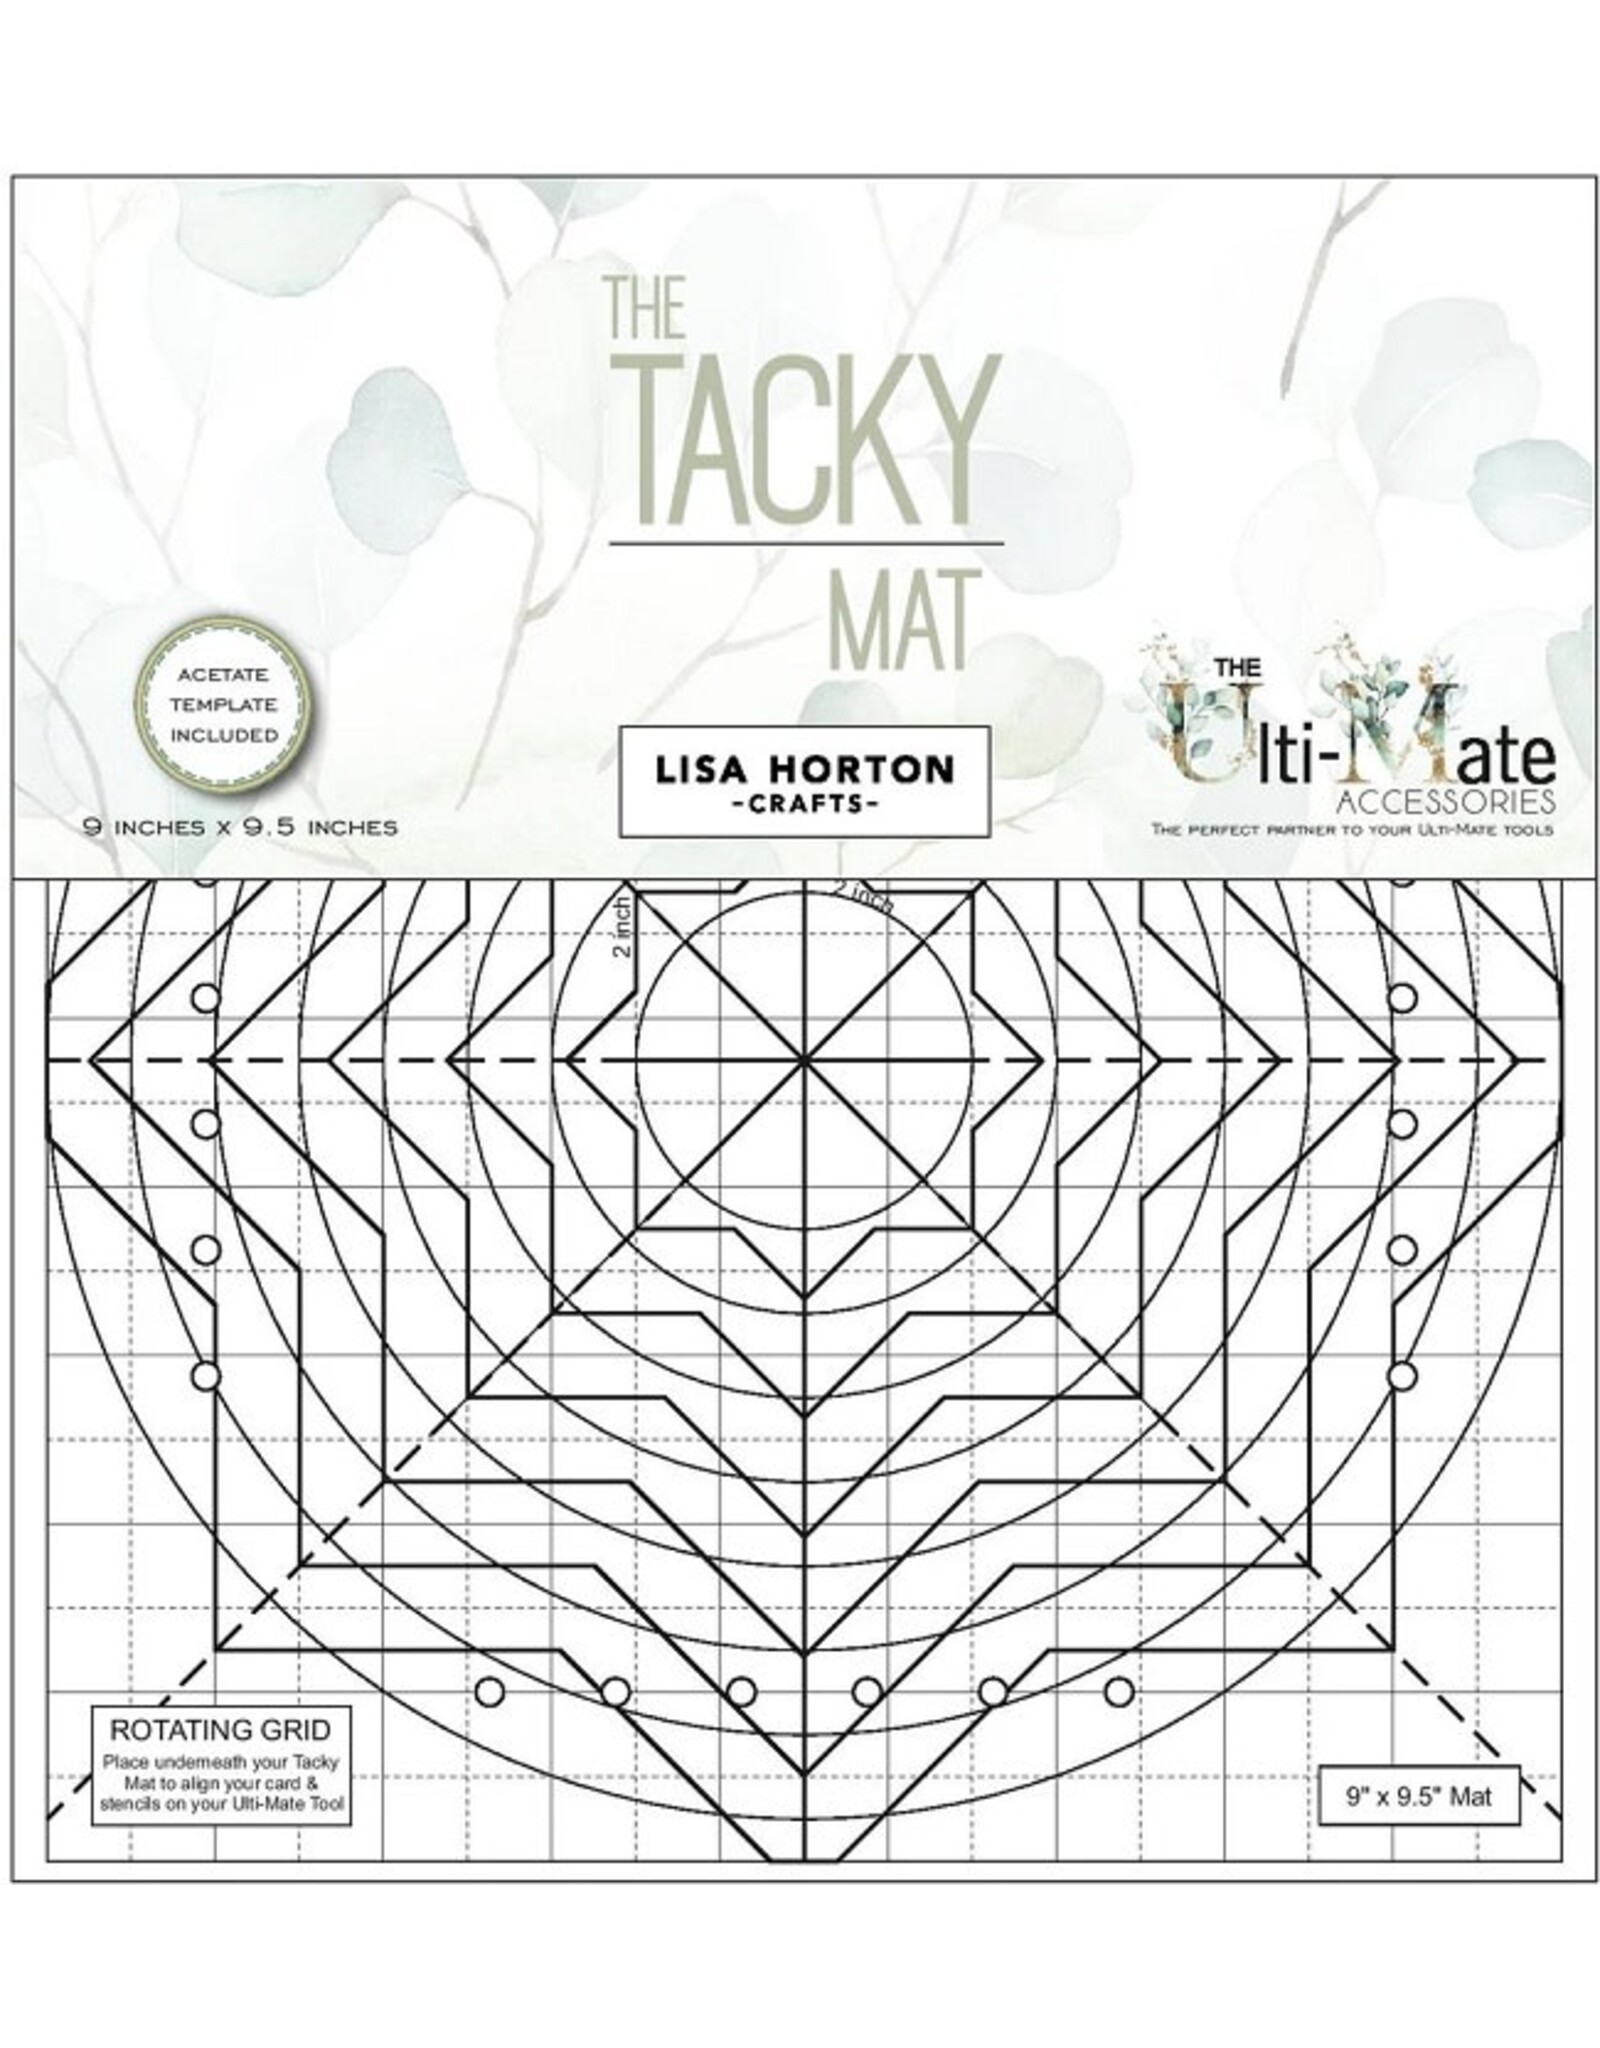 Lisa Horton Crafts Lisa Horton Crafts The Tacky Mat 9 x 9.5 inches